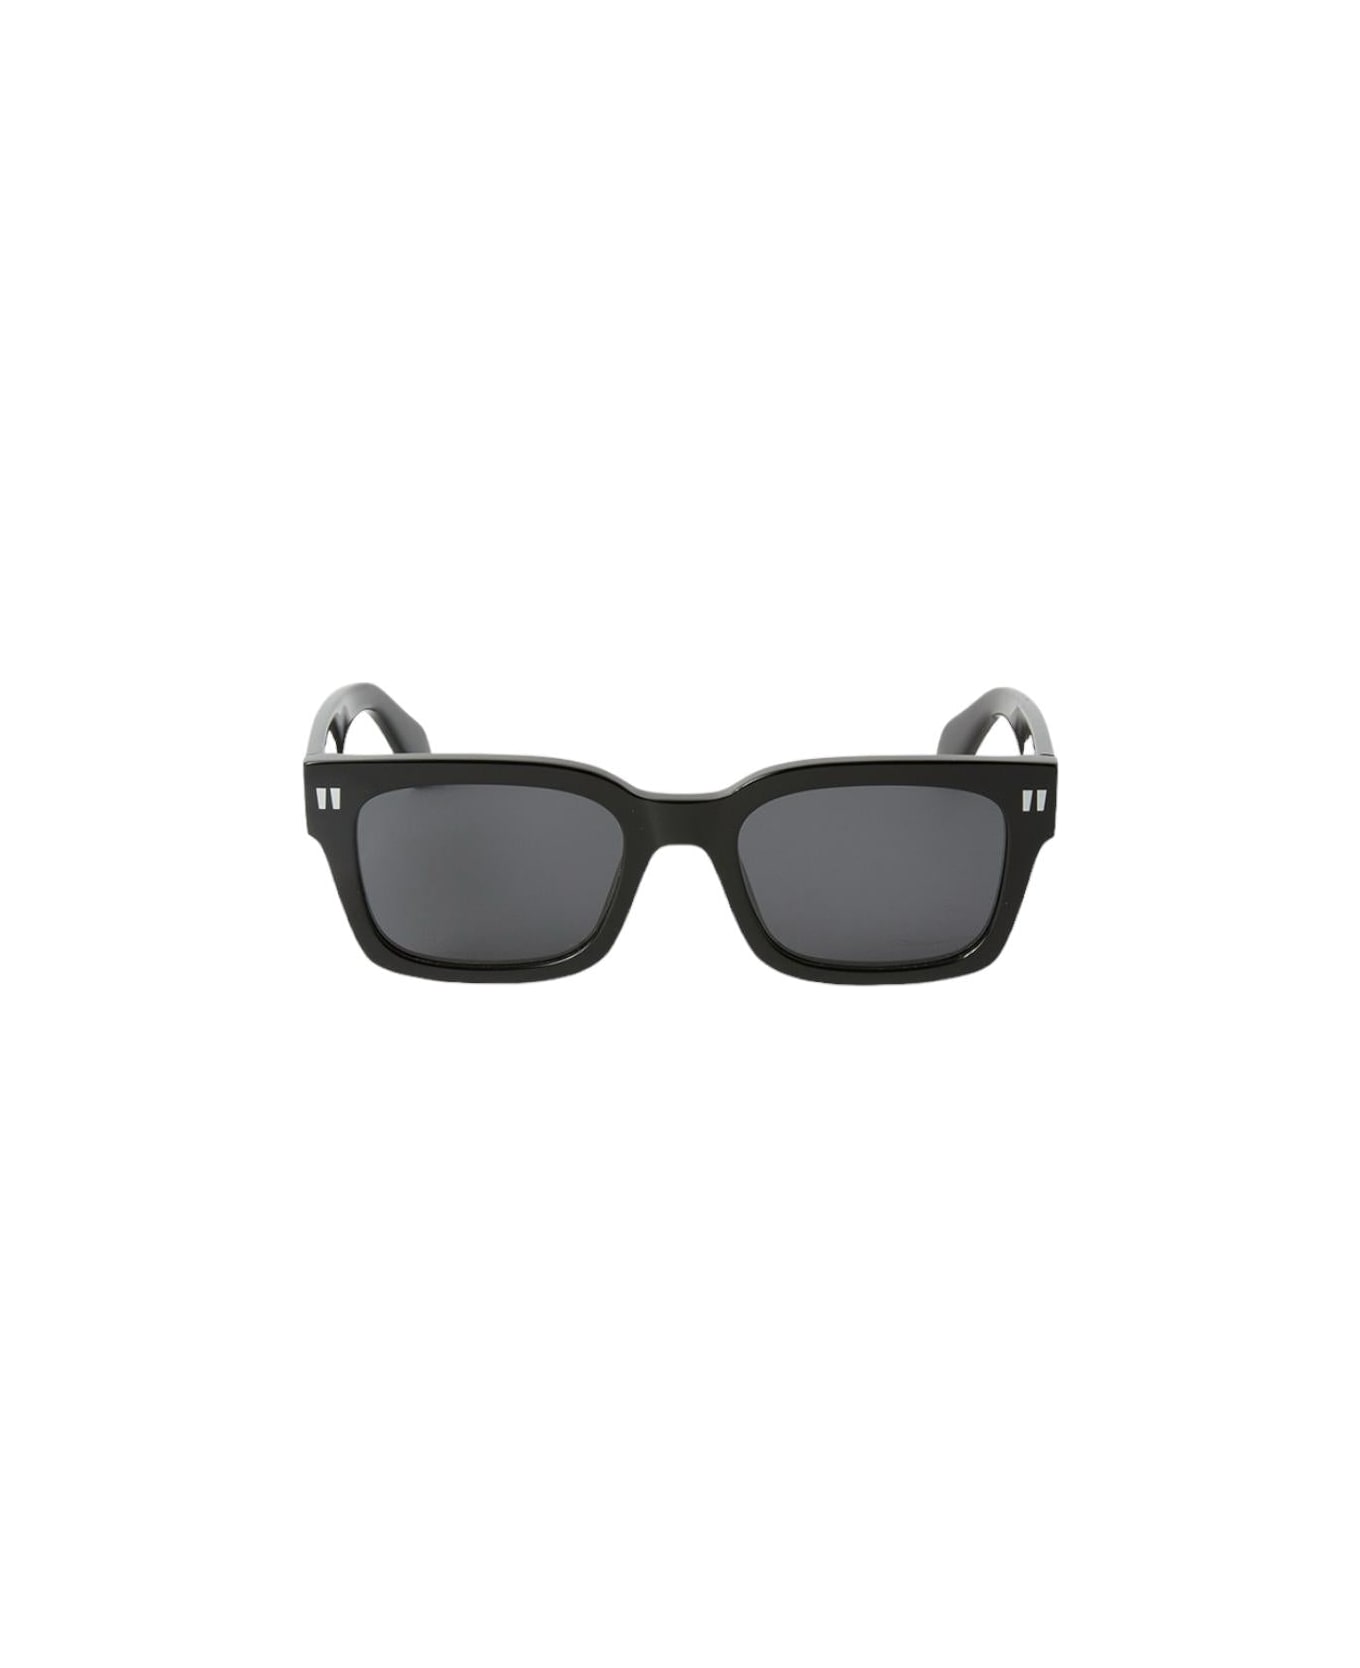 Off-White Midland - Oeri108 Sunglasses